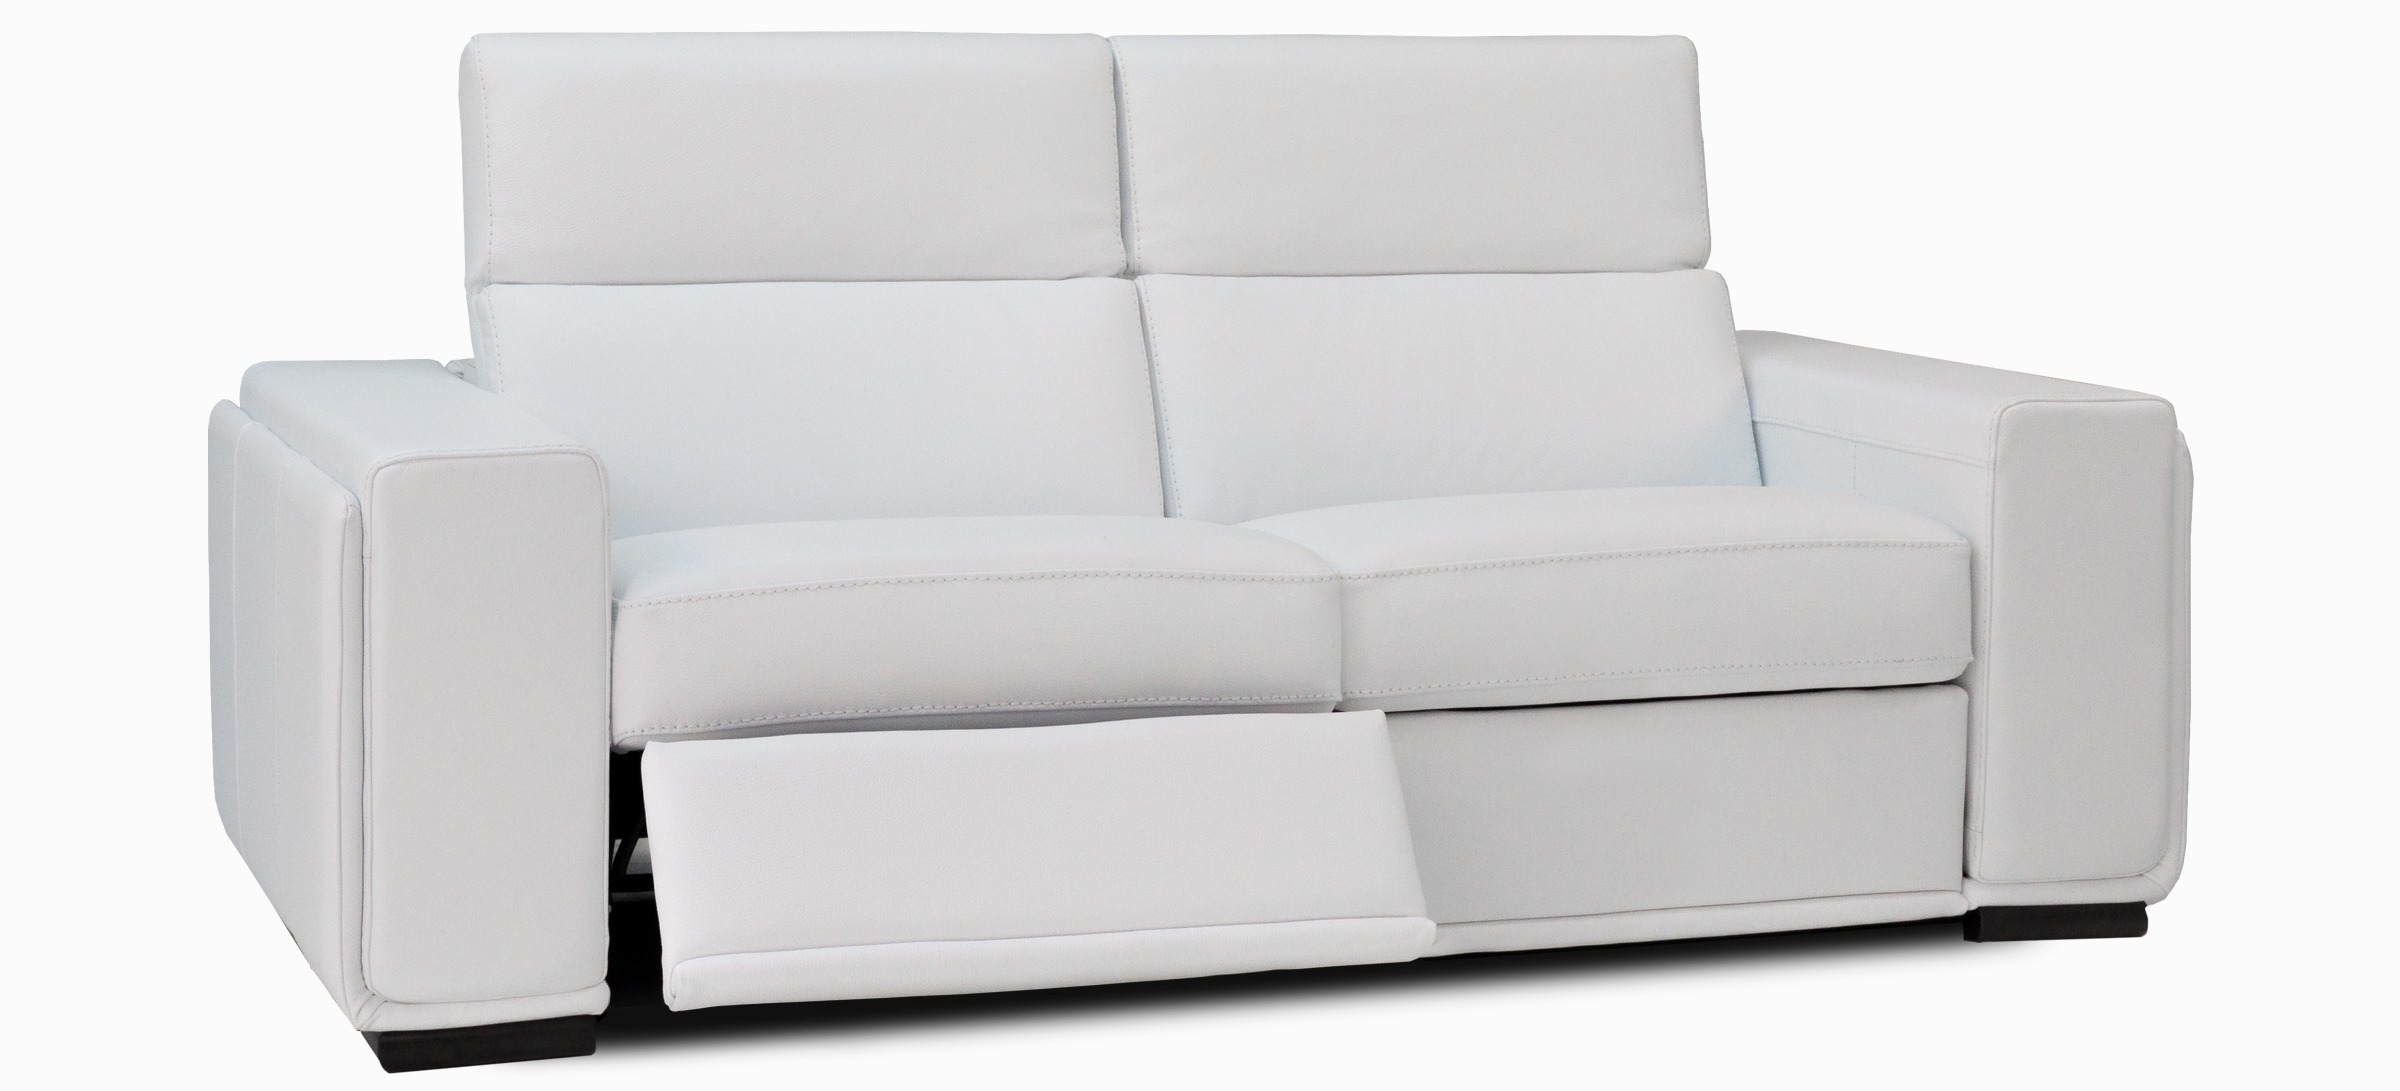 Maxima sofa apt Illusion White side open